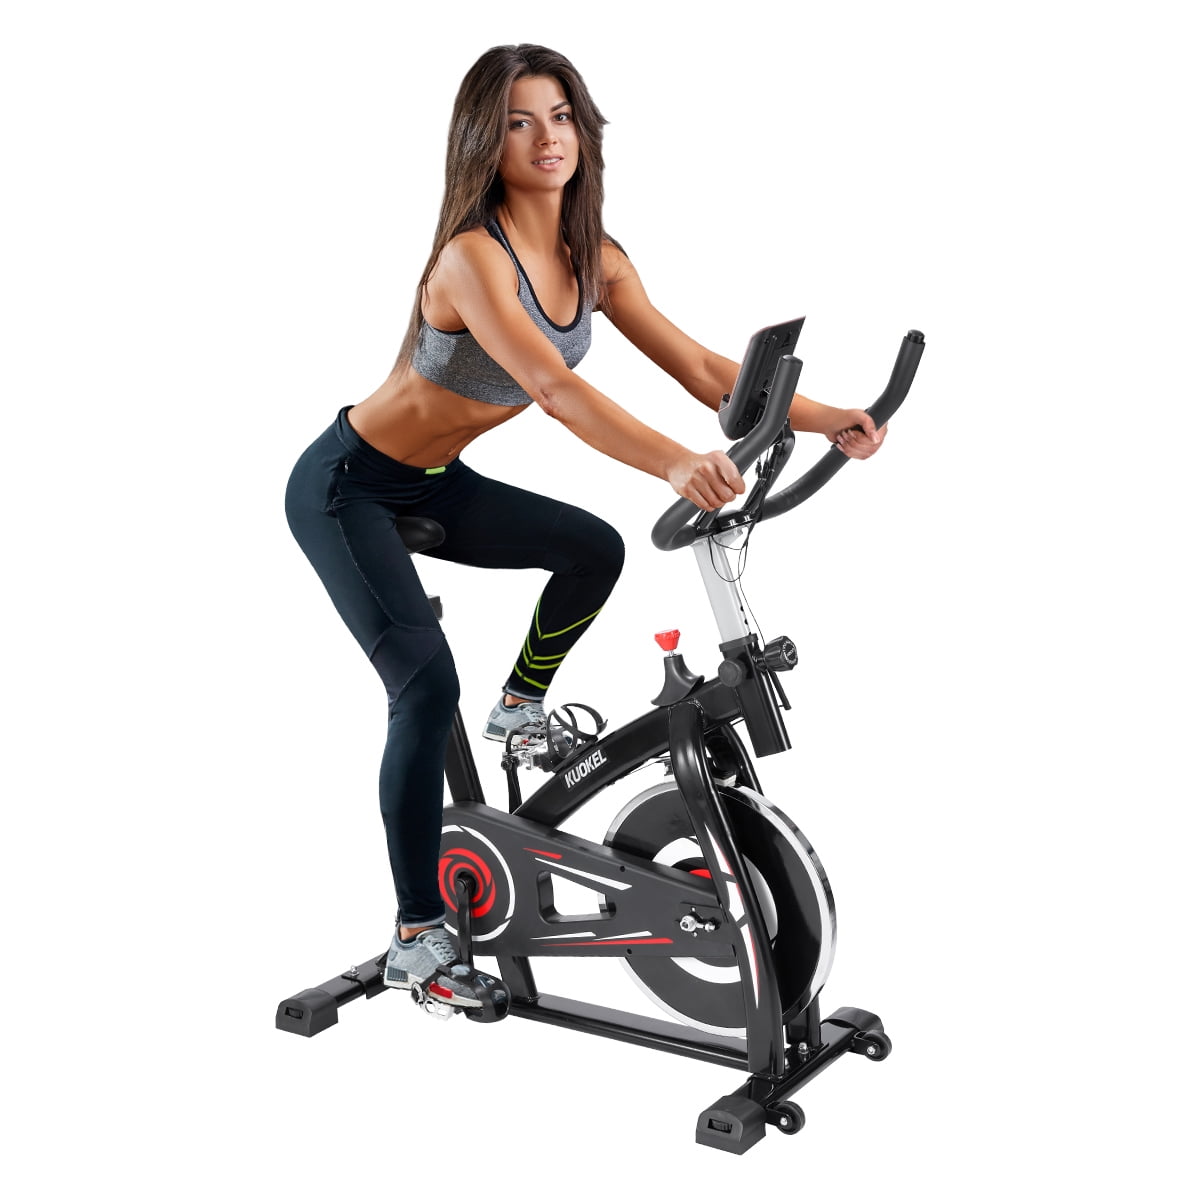 KUOKEL Exercise Bike fitnessbike Belt Drive Indoor Cycling Bike LCD Monitor, 